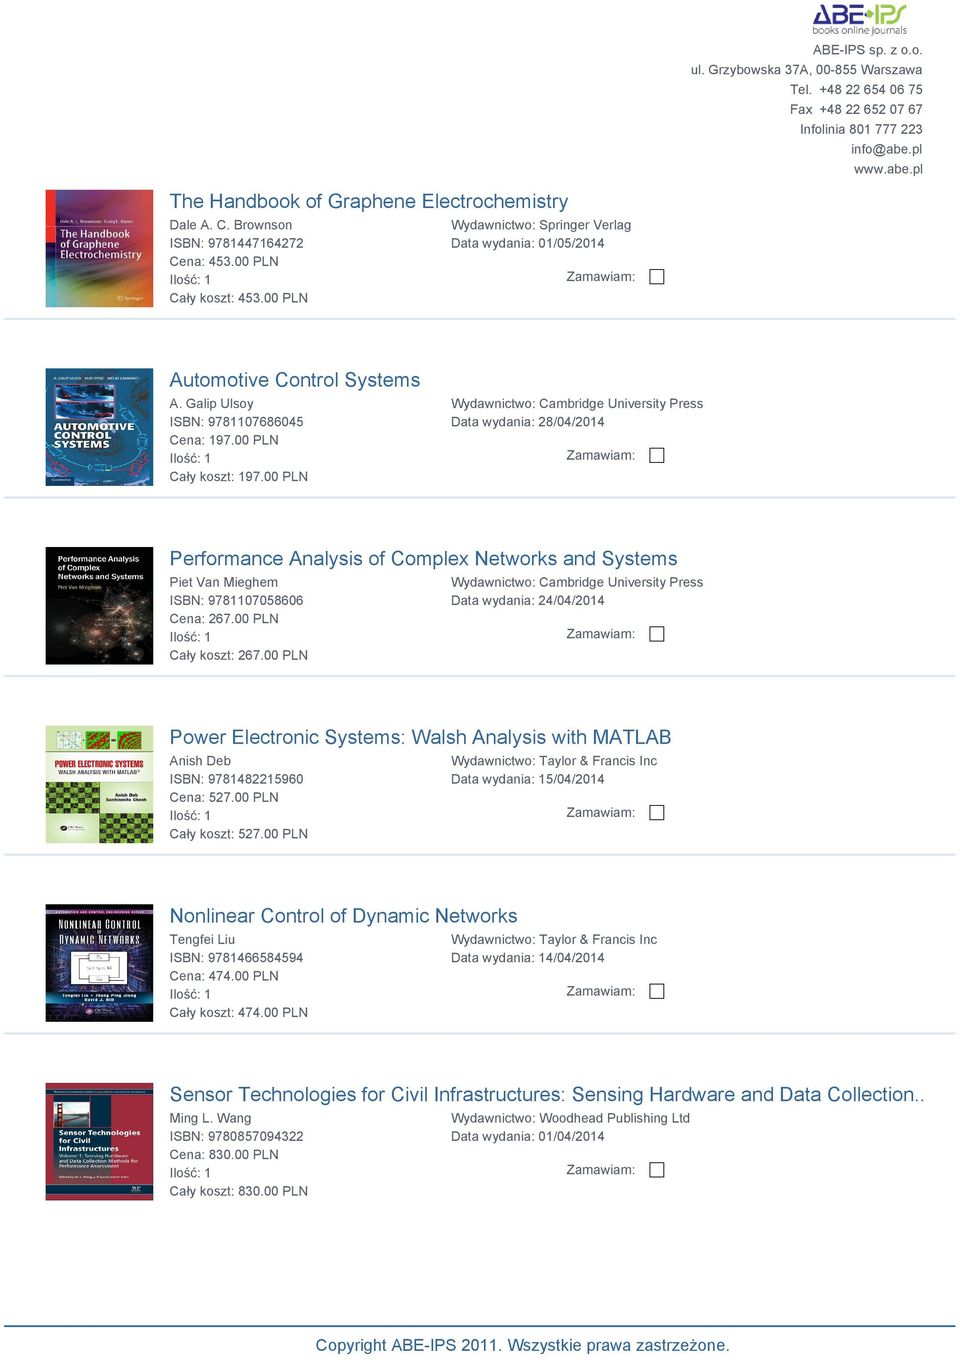 00 PLN Cały koszt: 197.00 PLN Performance Analysis of Complex Networks and Systems Piet Van Mieghem ISBN: 9781107058606 Cena: 267.00 PLN Cały koszt: 267.